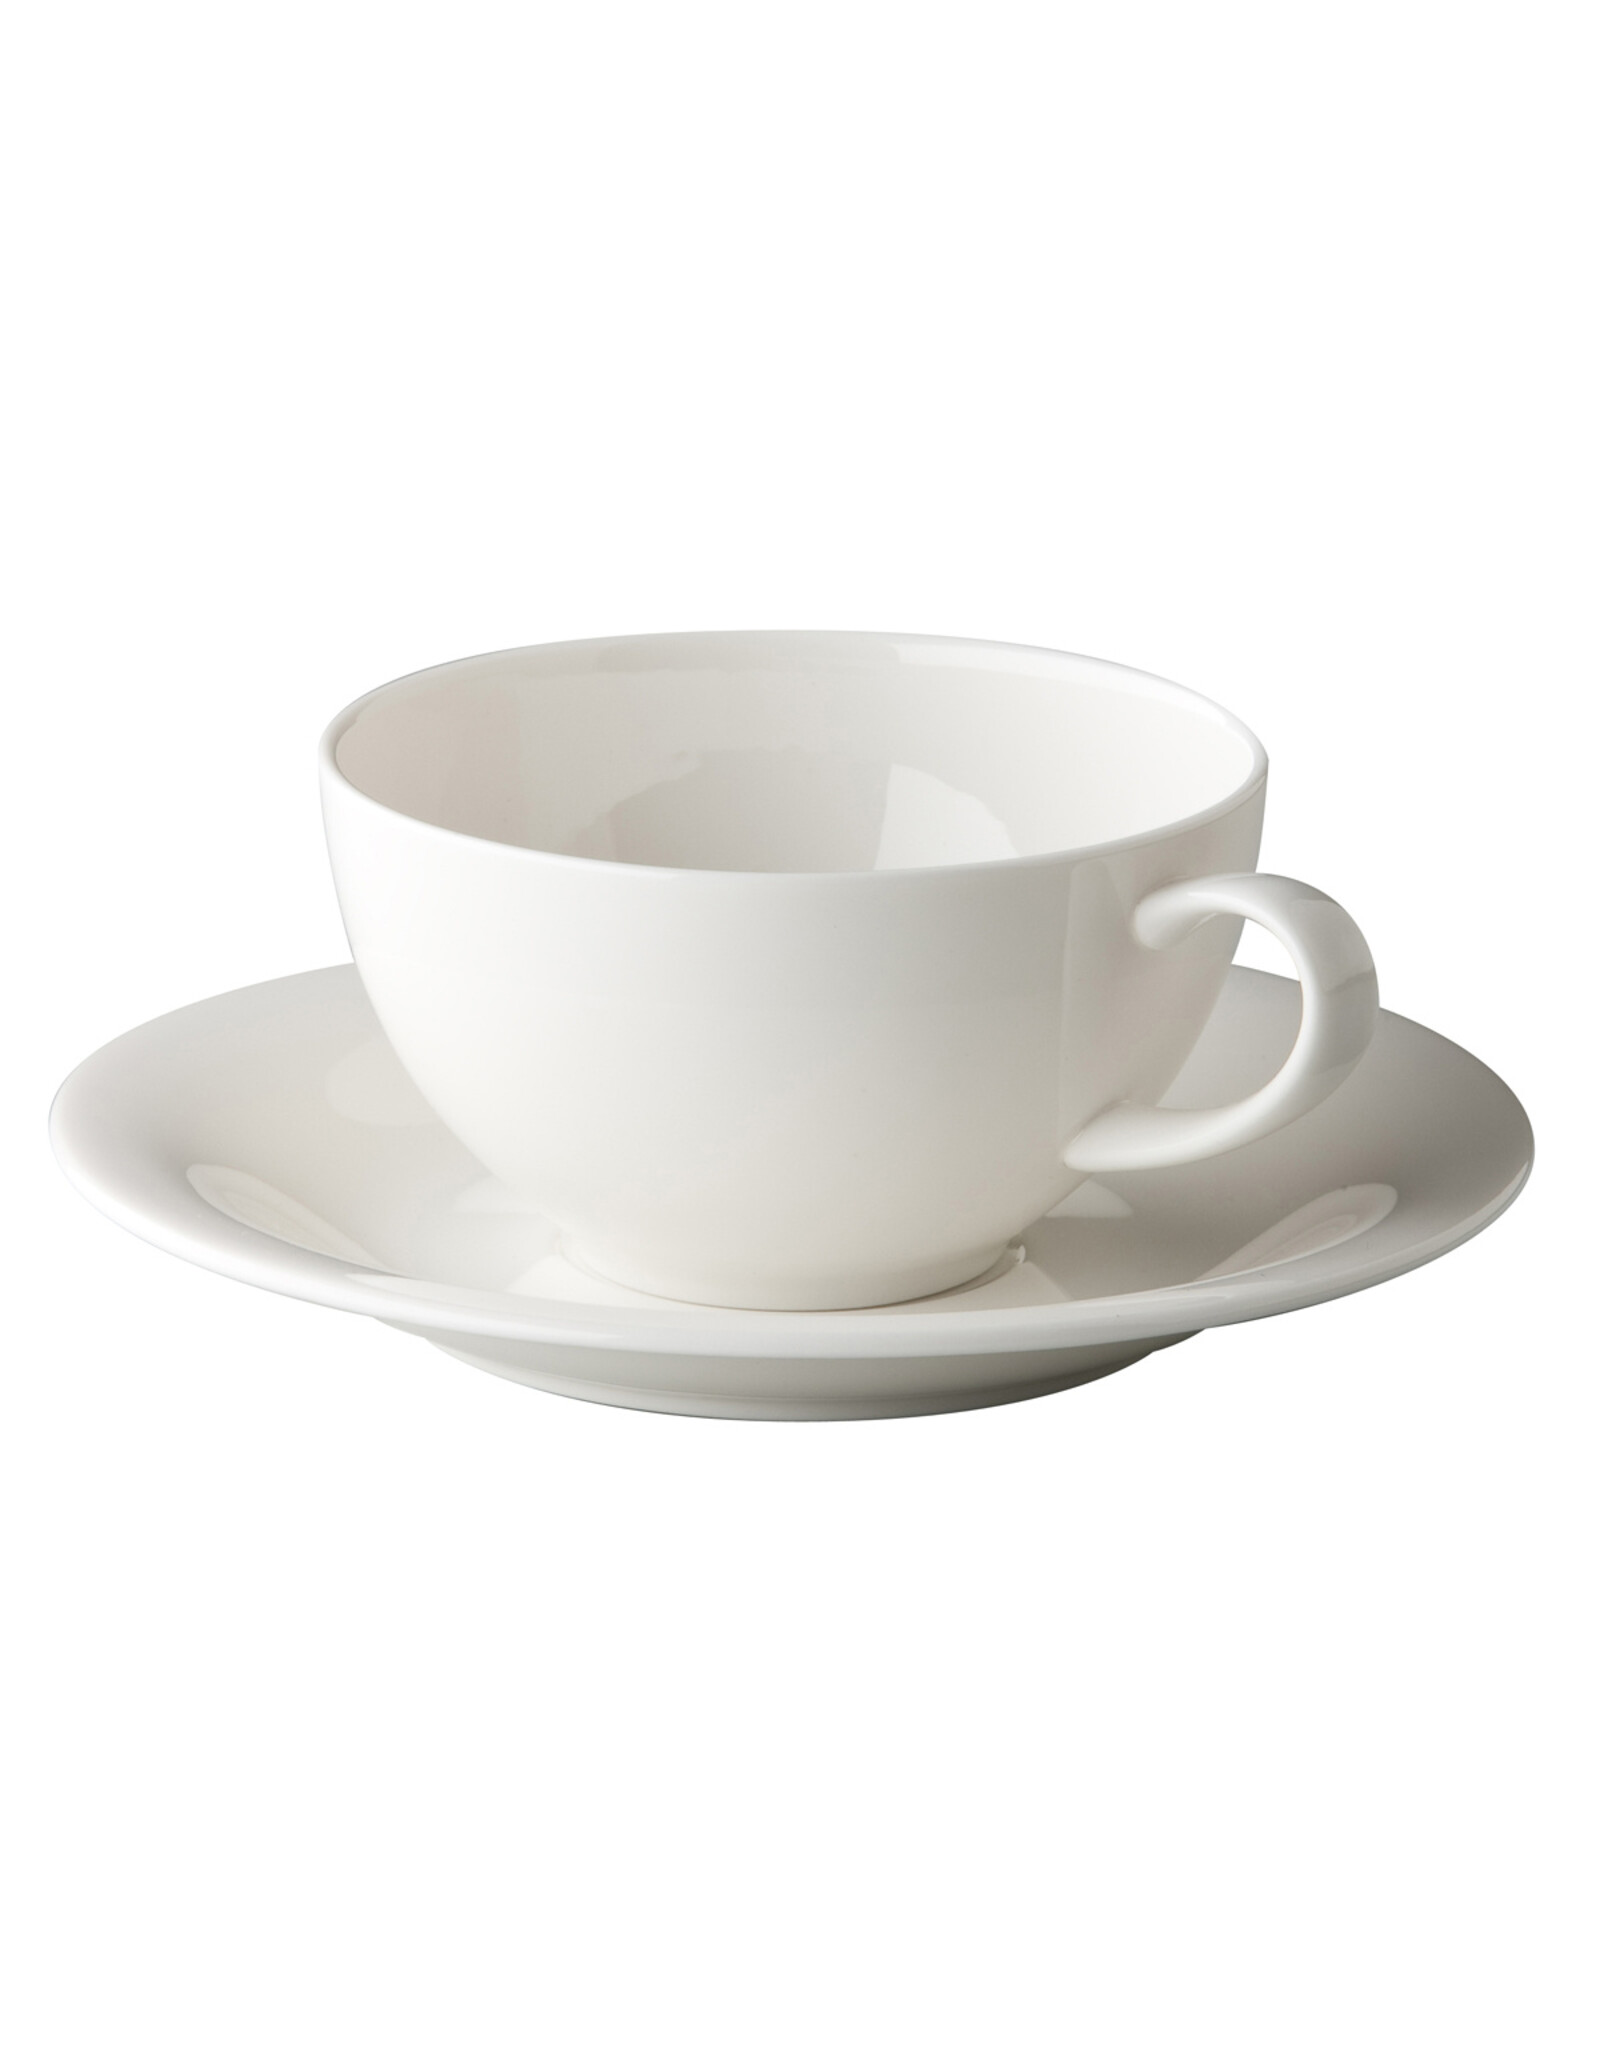 Stylepoint Tea saucer Elegance 16,5 cm